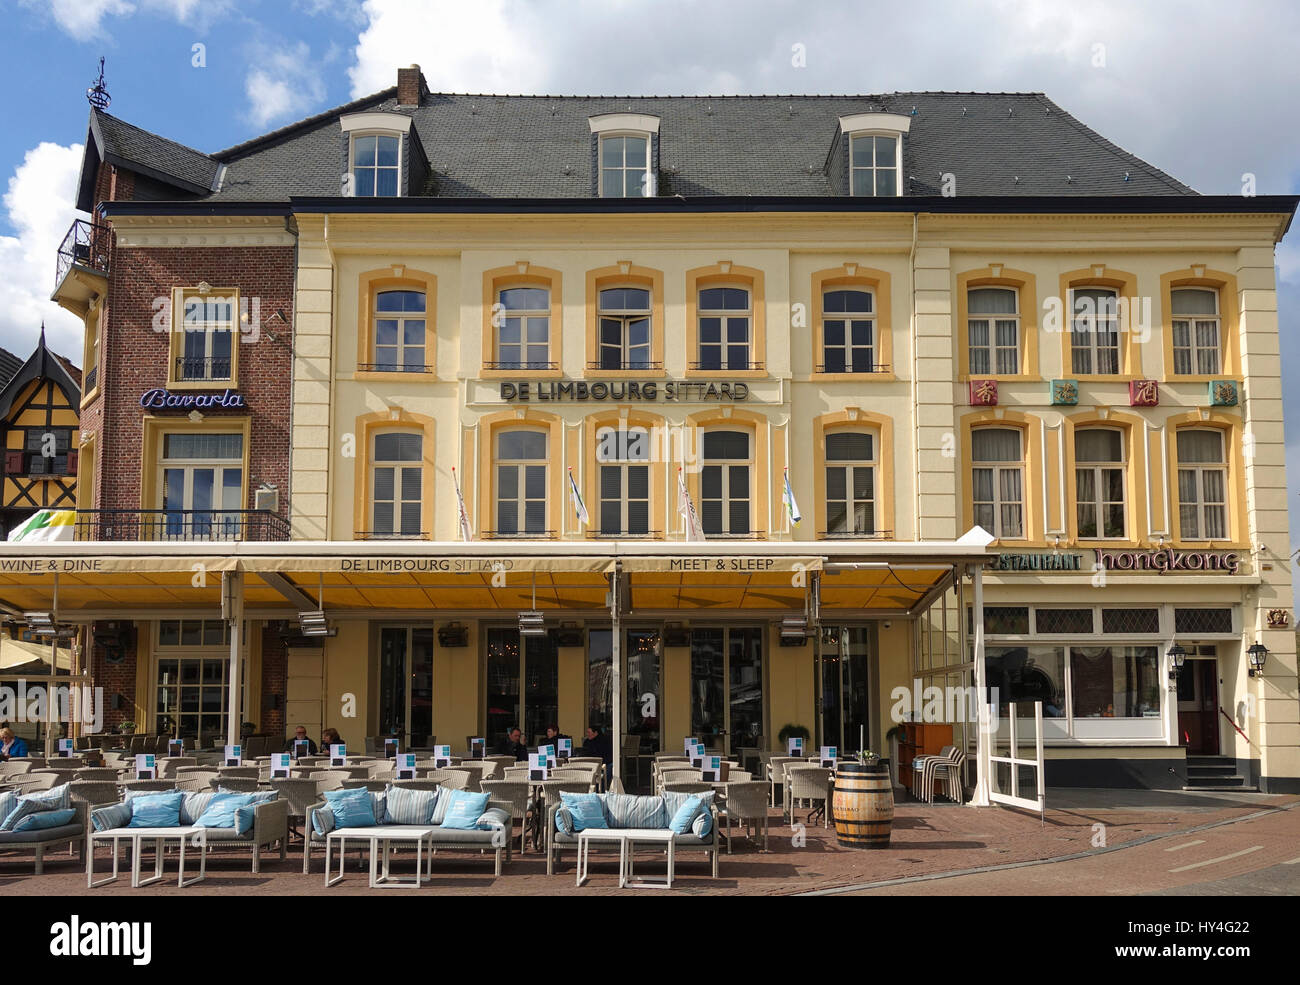 Hotel de limbourg, 3 star Hotel, in traditional dutch architecture, market, Sittard, Limburg, Netherlands. Stock Photo